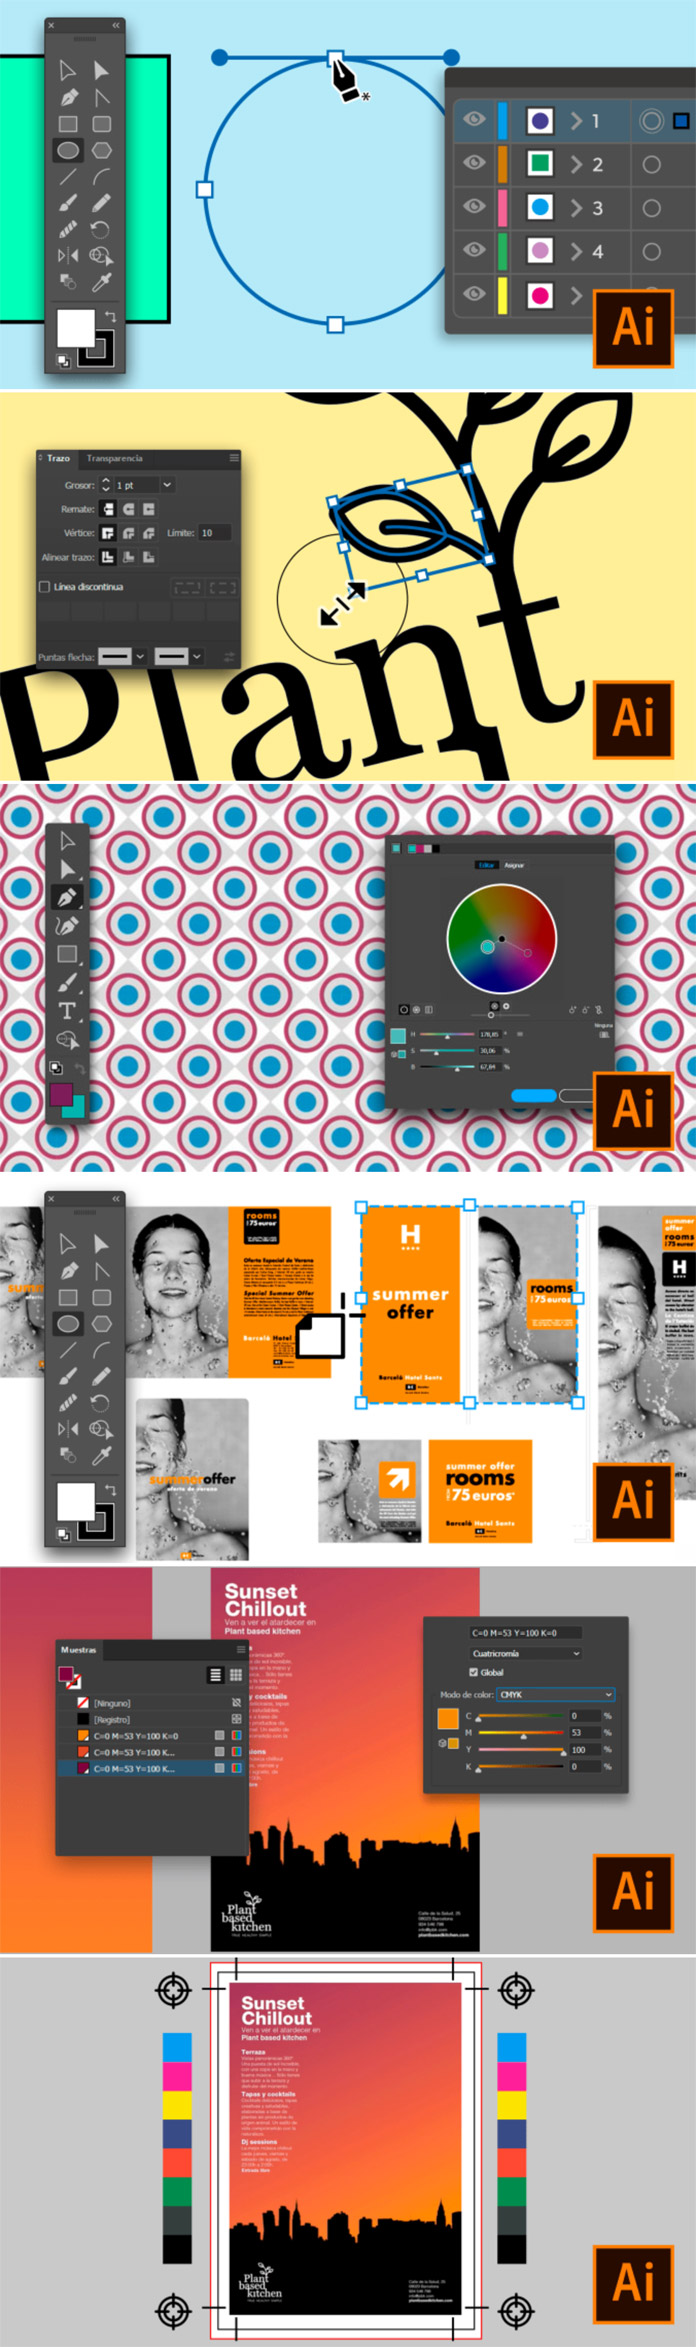 Adobe Illustrator for Graphic Design